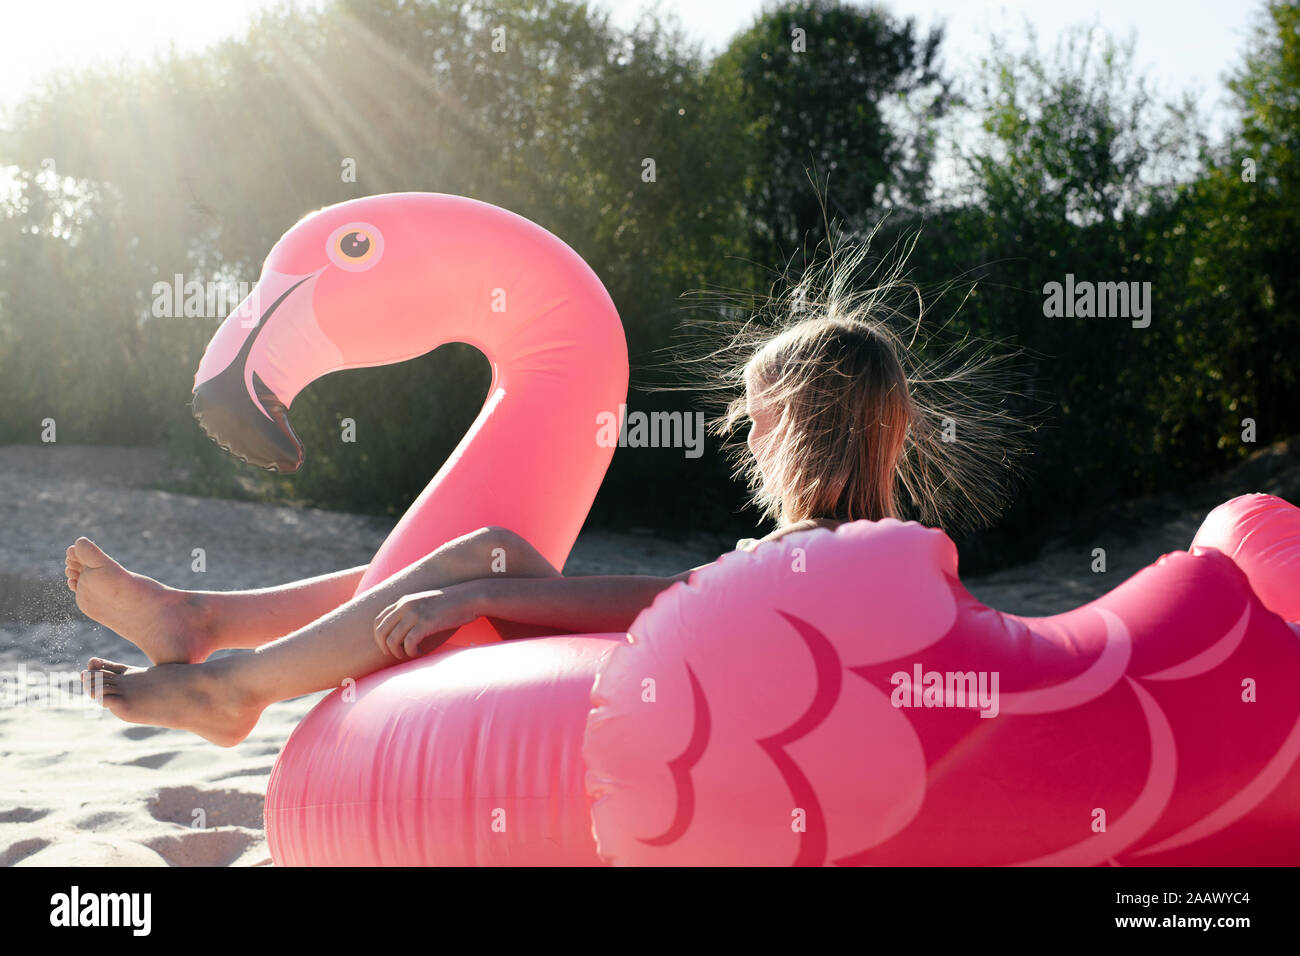 Girl sitting on flamingo pool float Stock Photo